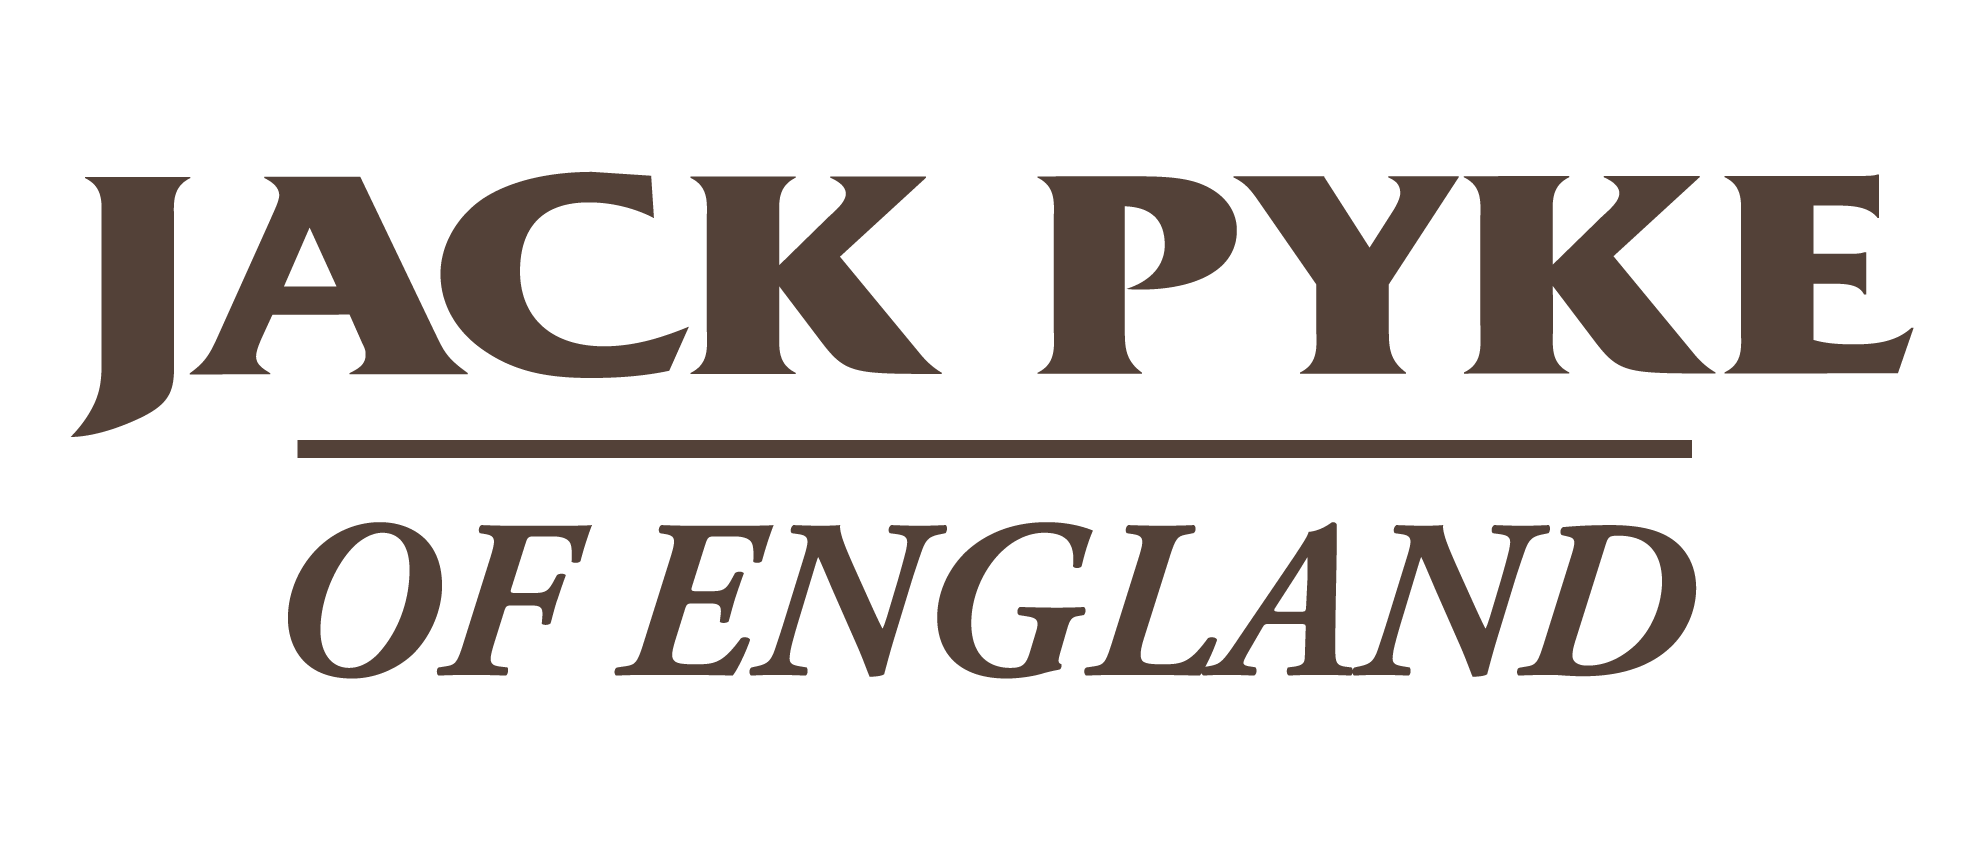 www.jackpyke.co.uk